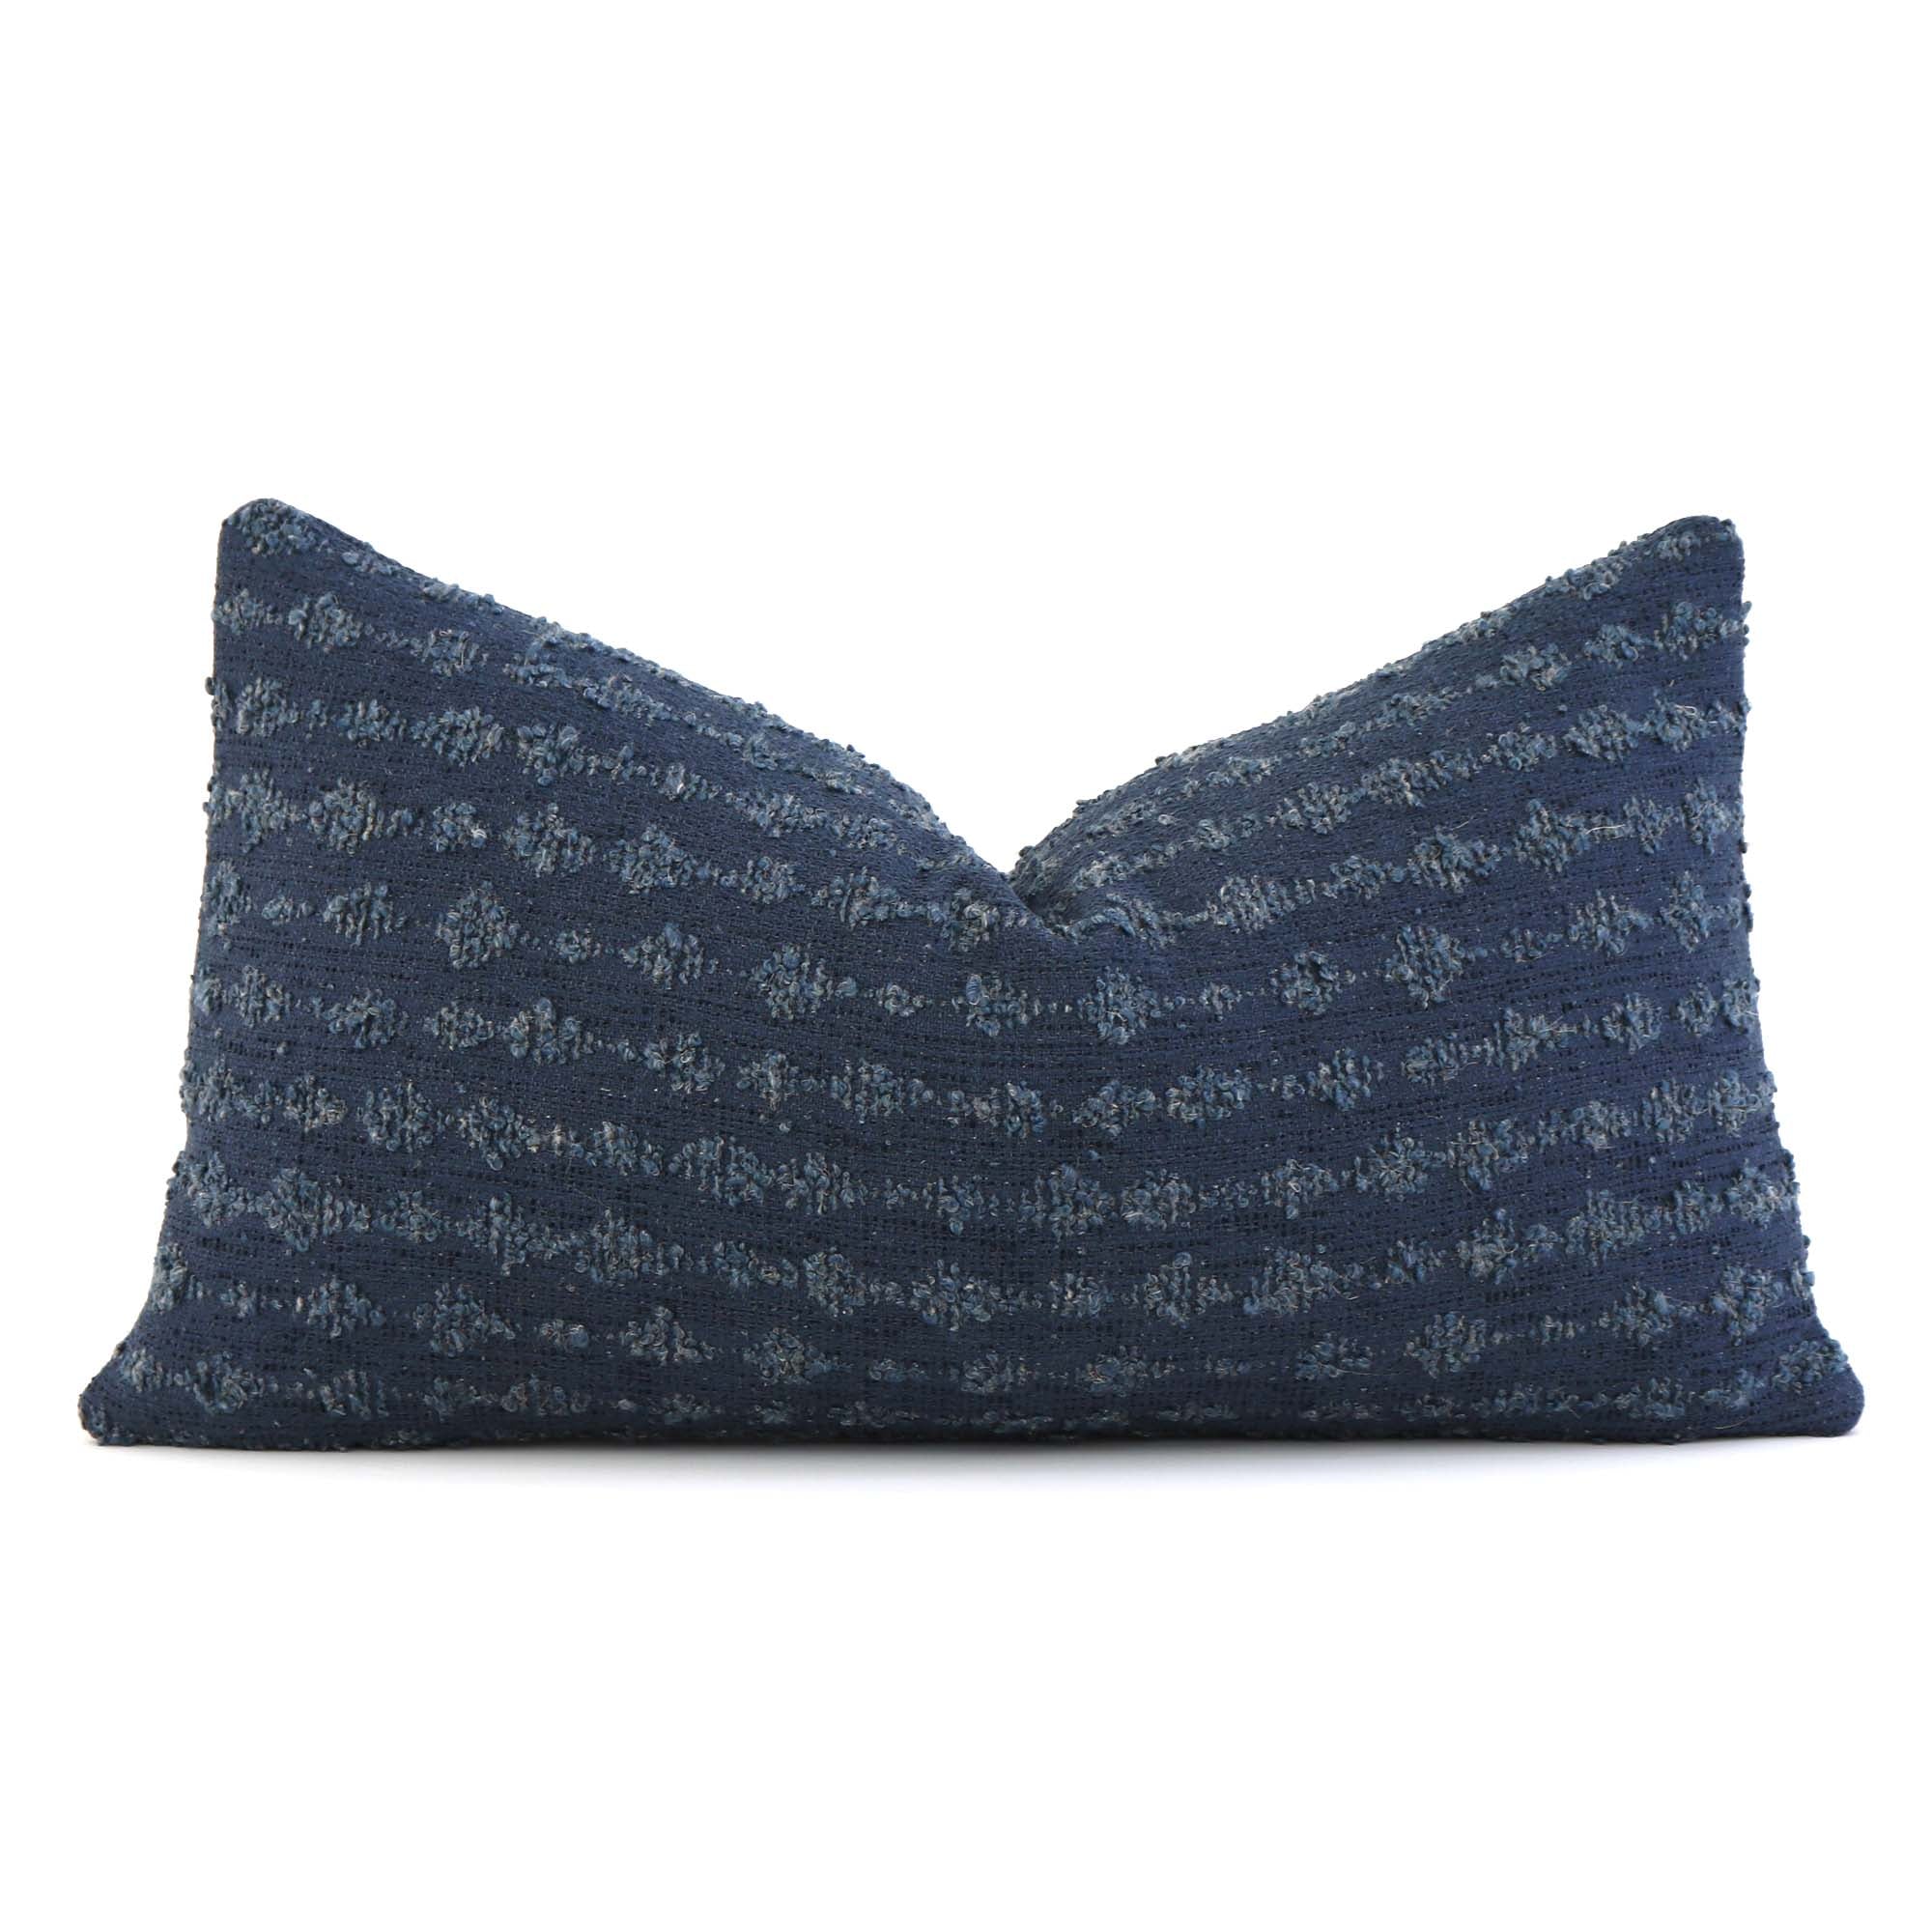 Kelly Wearstler LeeJofa Midnight Blue and Turquoise Stripe Bouclé Designer Lumbar Throw Pillow Cover